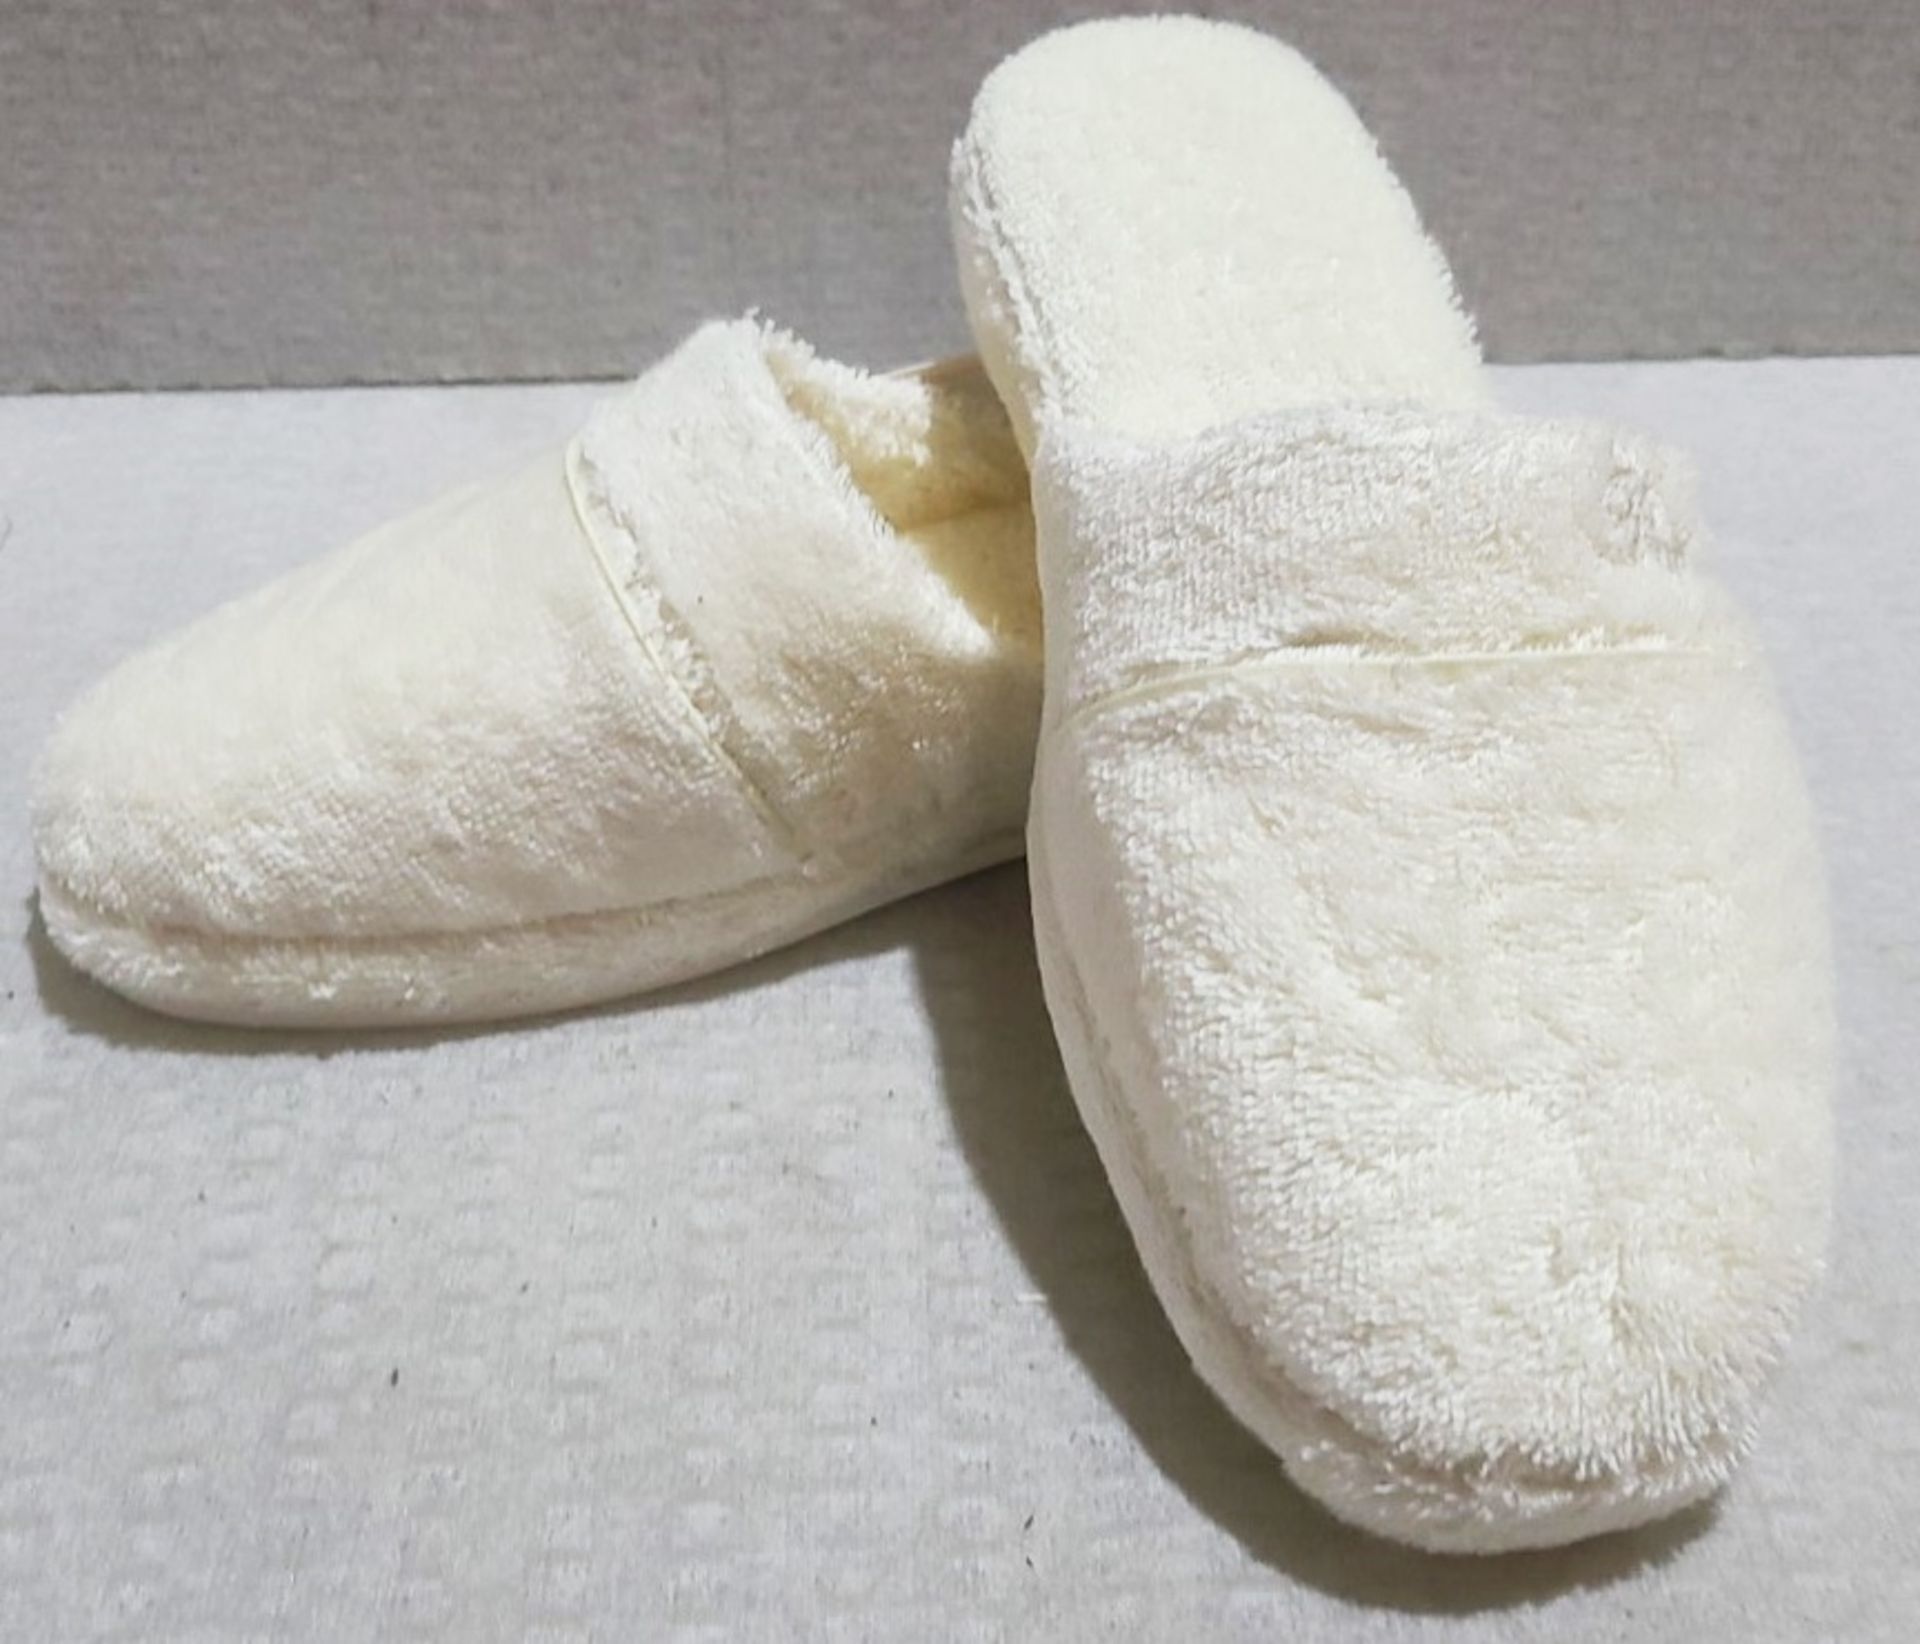 1 x PRATESI Panofole Off White Terry Cotton Slippers Size 40/41 - Original Price £200.00 - Image 4 of 5